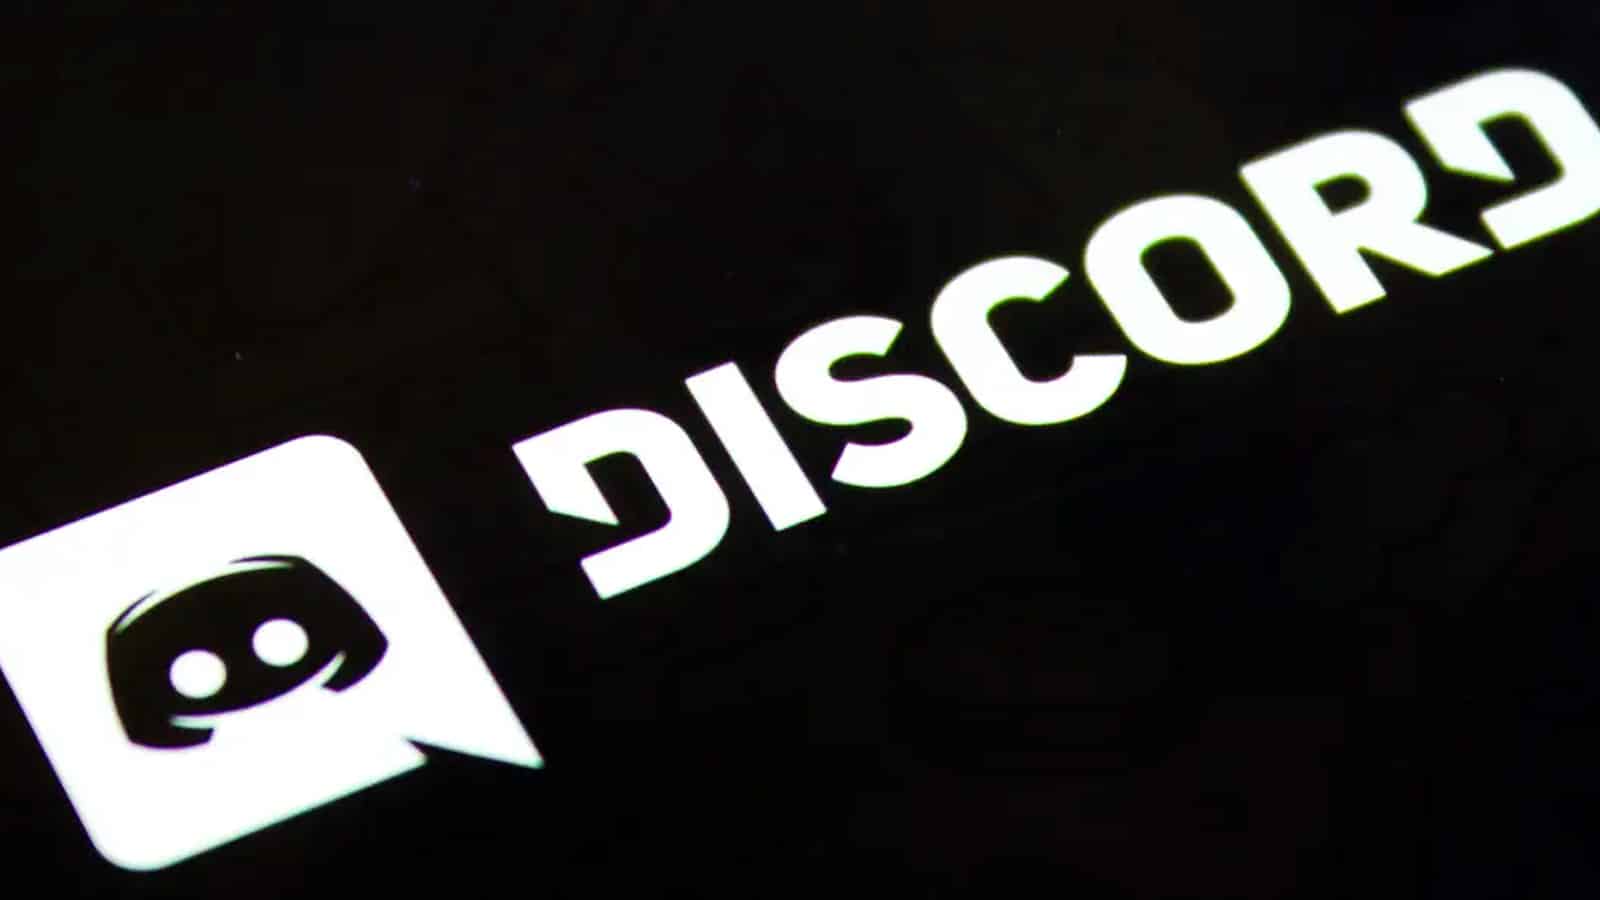 Discord sale may hit $10 billion as Microsoft, Amazon circle.